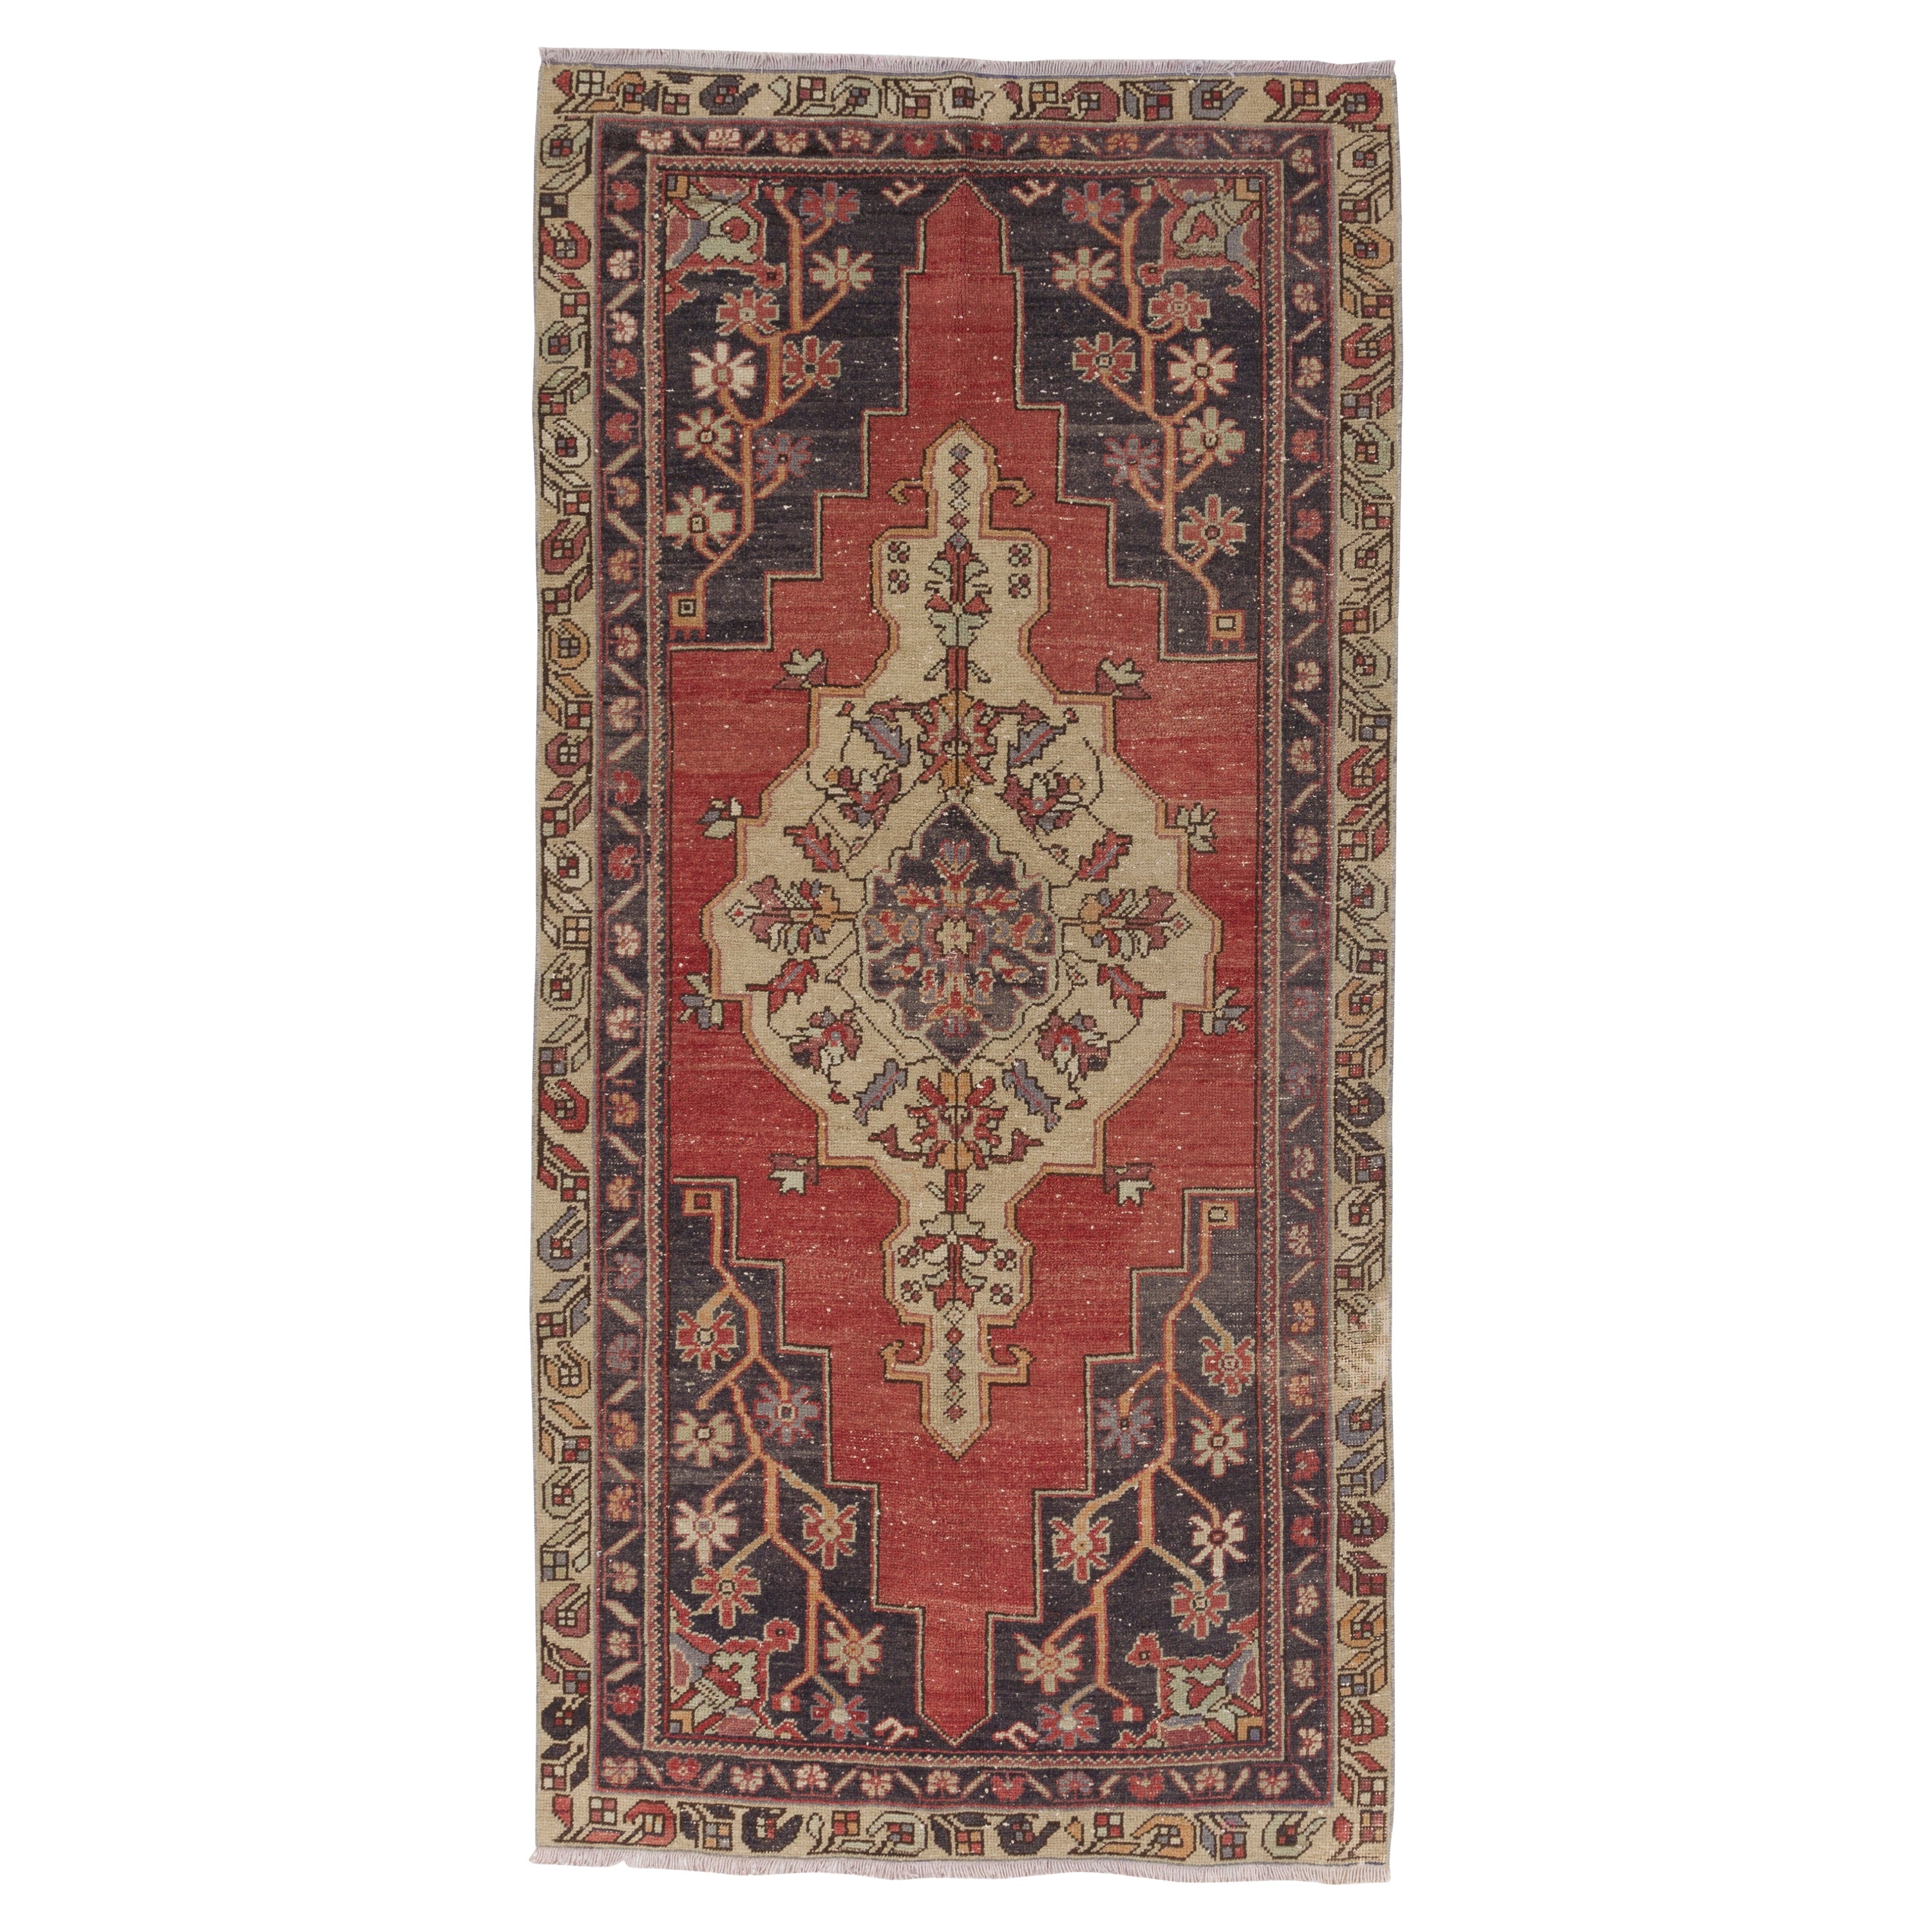 4x8.4 ft Handmade Vintage Turkish Village Rug, Traditional Oriental Wool Carpet For Sale